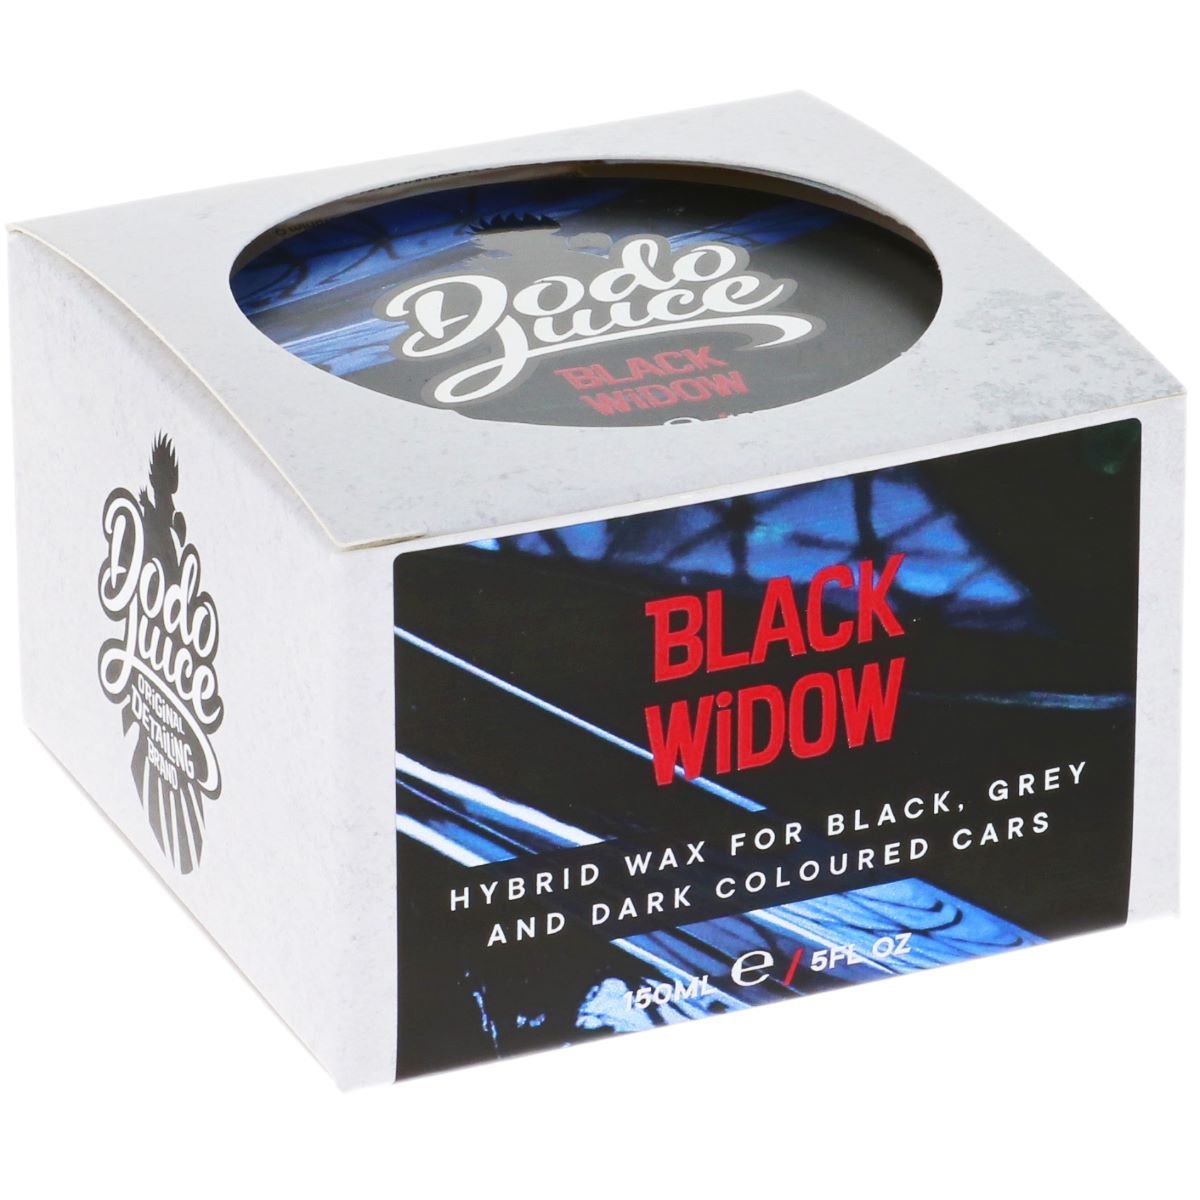 Black Widow hybrid wax for dark coloured cars - 150ml